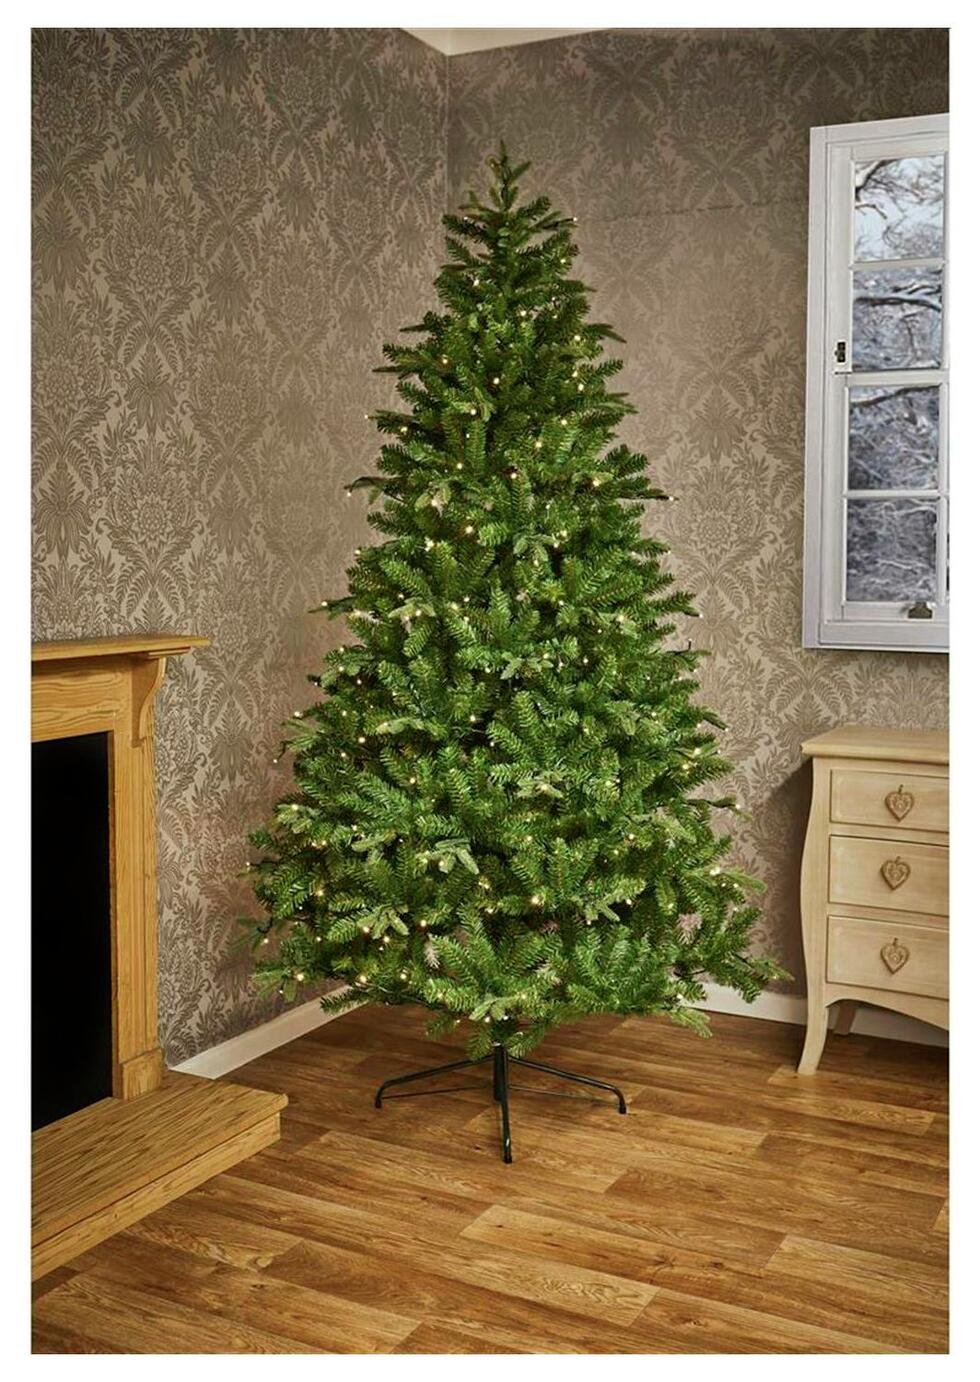 Premier Decorations 7ft Pre-lit Pine Christmas Tree - Green